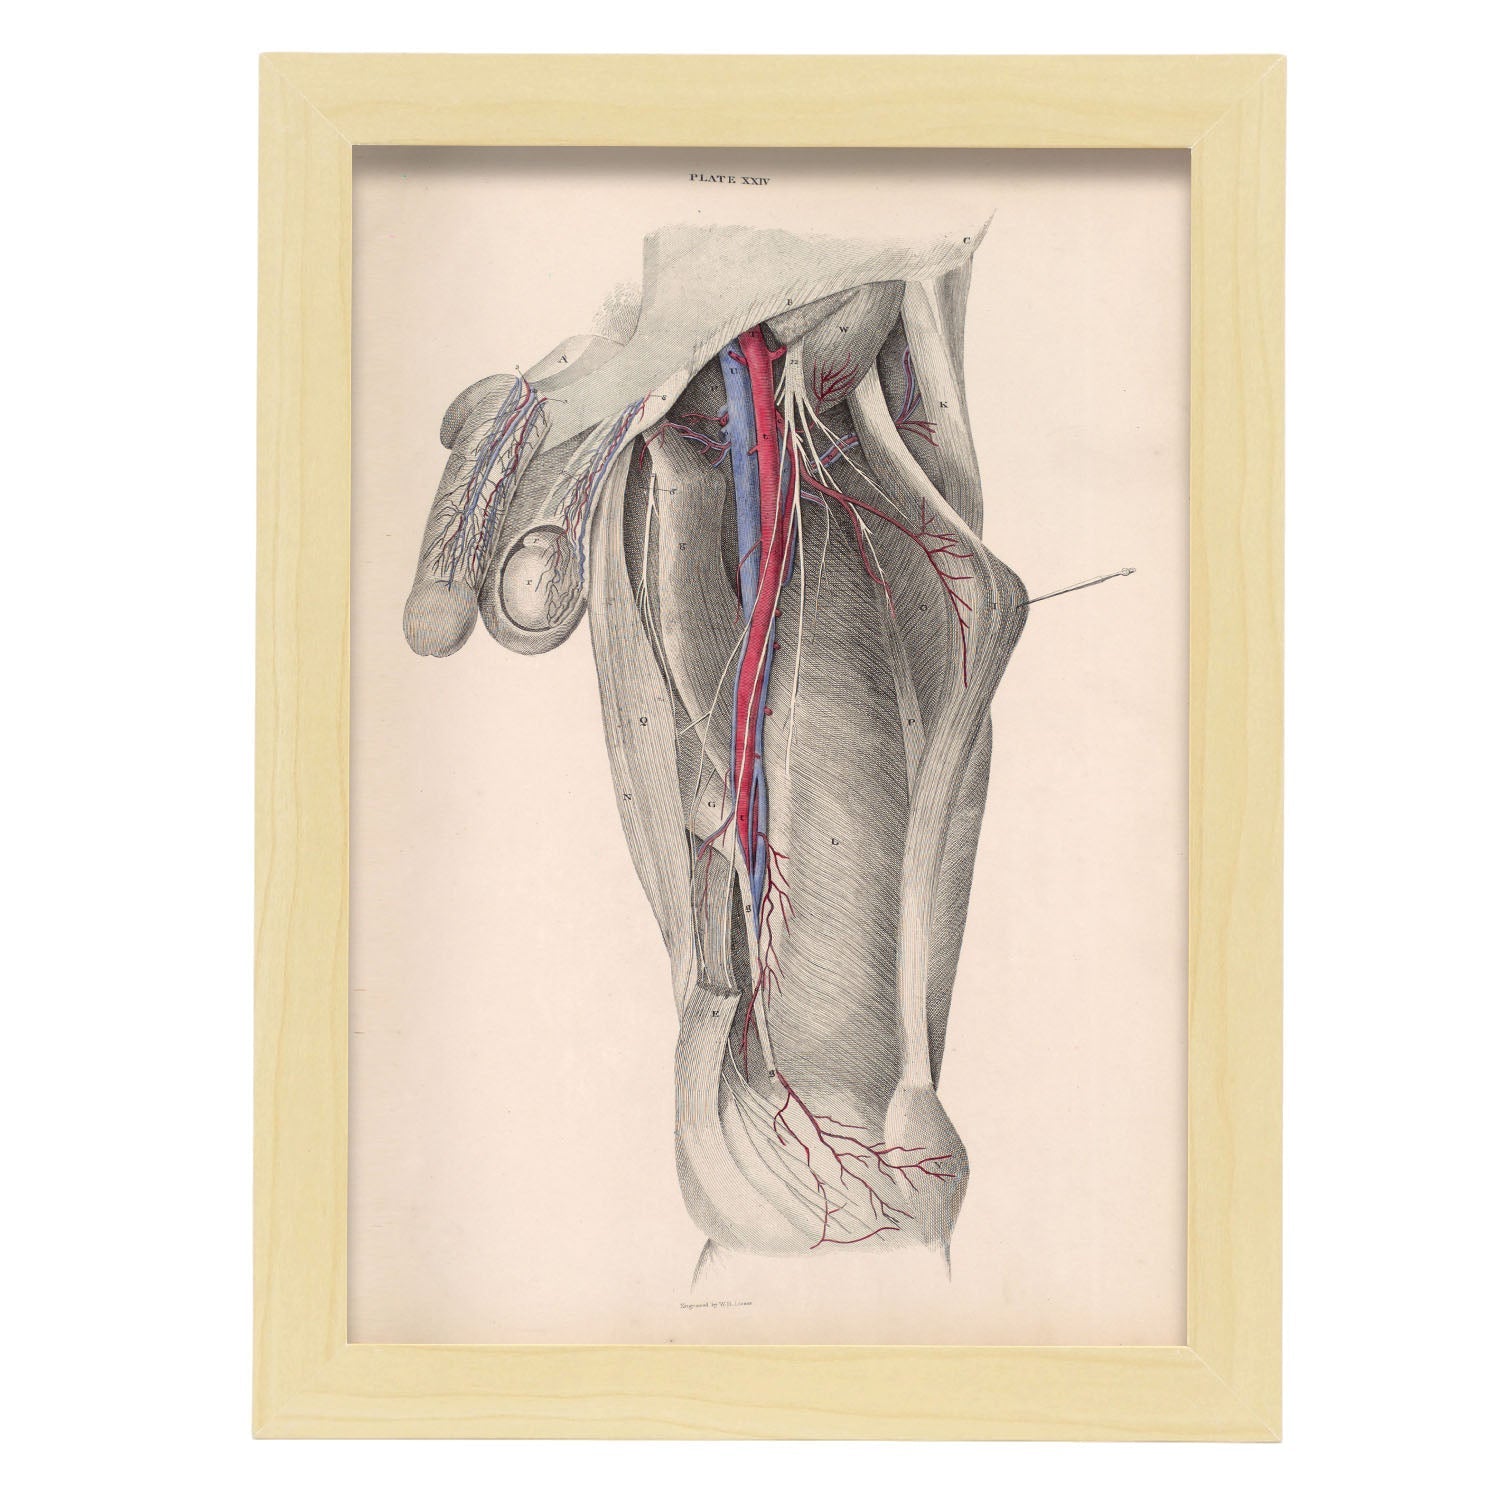 Dissection of the groin-Artwork-Nacnic-A4-Marco Madera clara-Nacnic Estudio SL